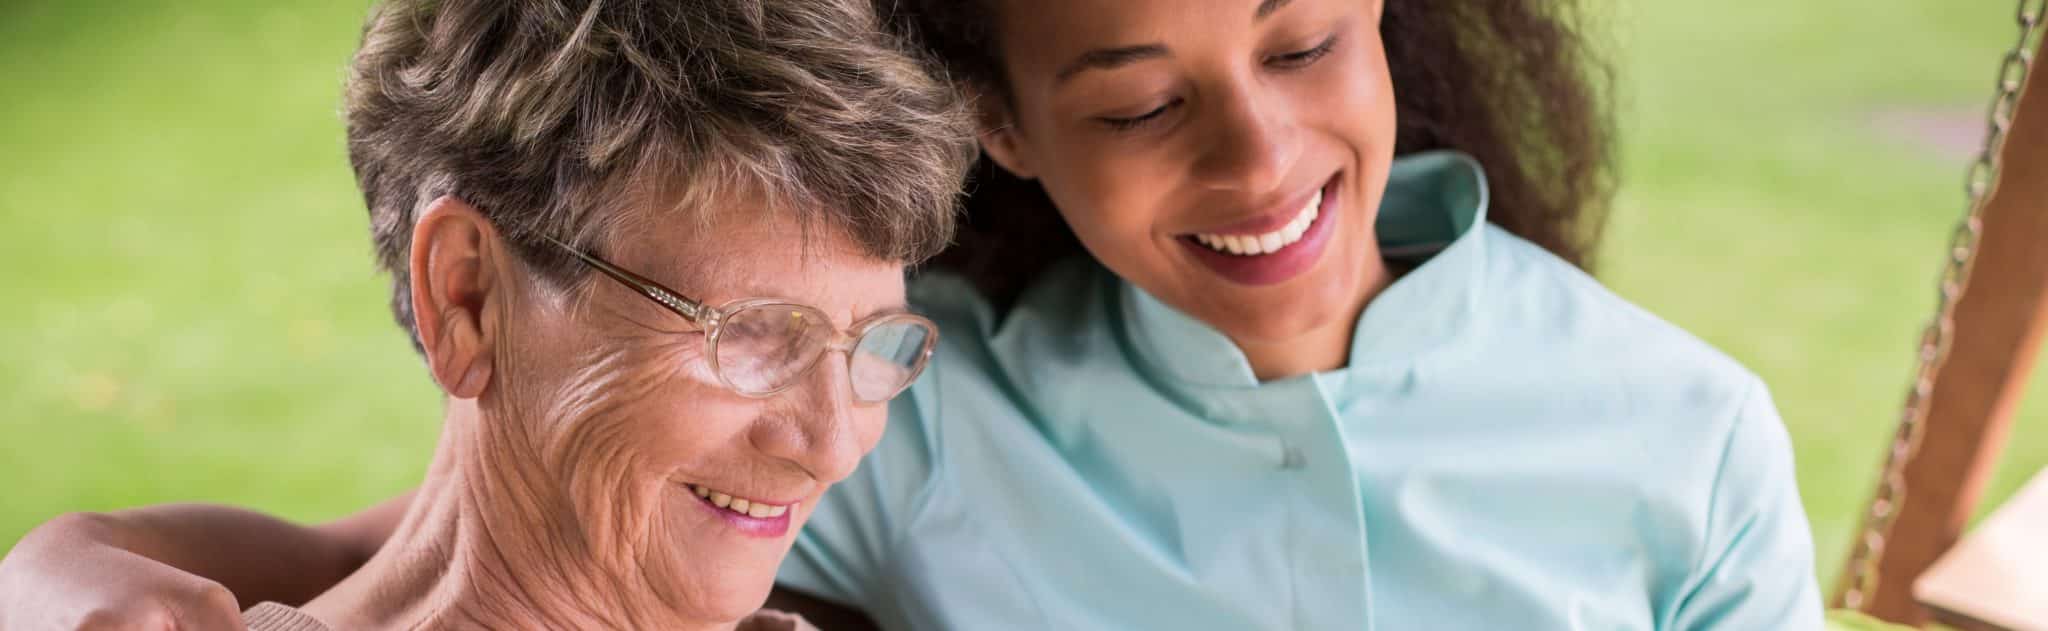 Home Elder Care Assistance New Jersey